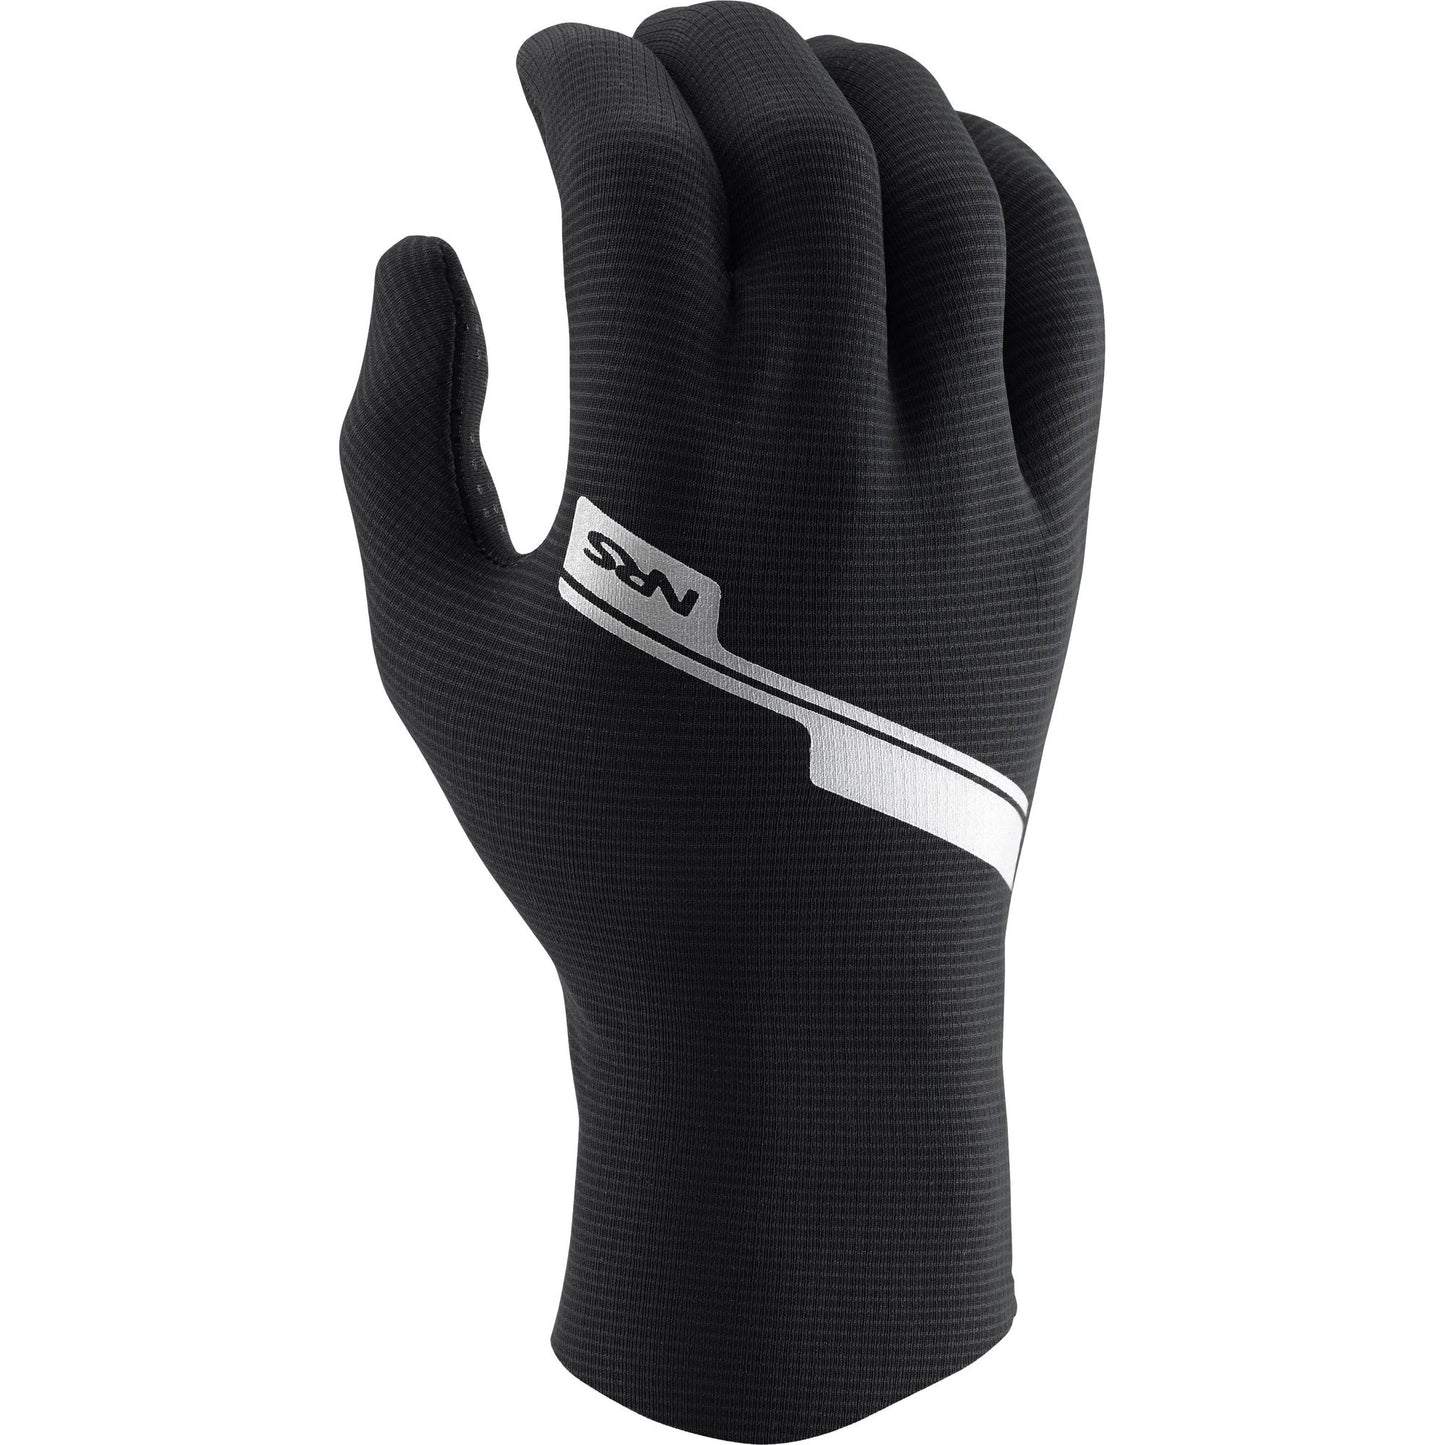 NRS Hydroskin glove, men's